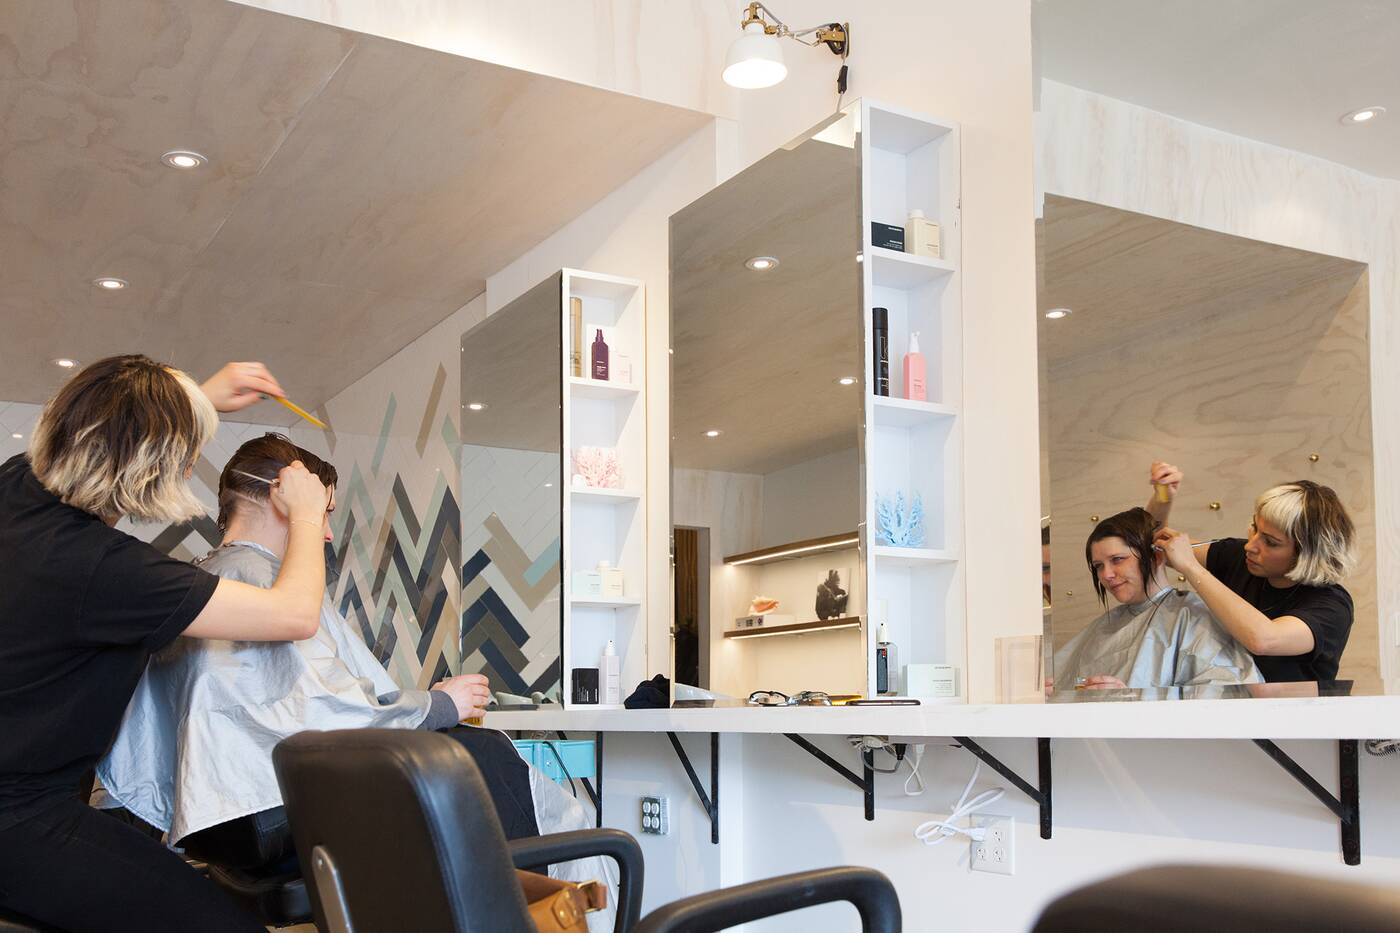 The Top 25 Hair Salons In Toronto By Neighbourhood